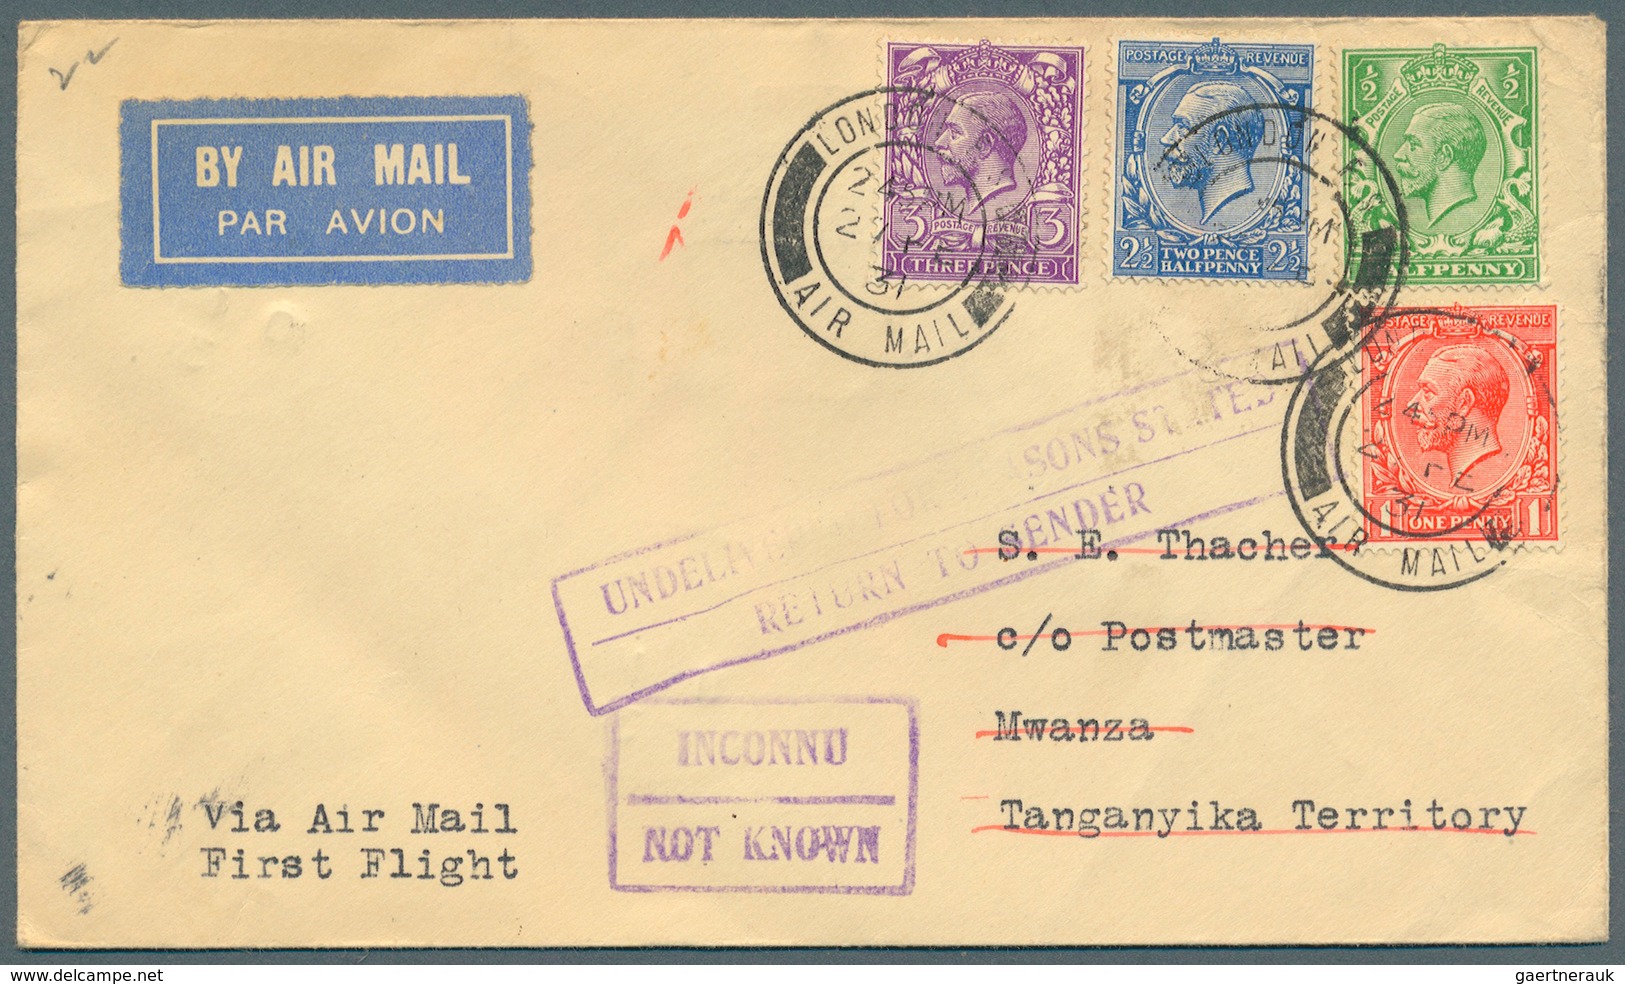 24822 Flugpost Übersee: Ab 1923: 79 frühe Flugbelege, einige nach Afrika, viele dekorative Erstflugbelege,